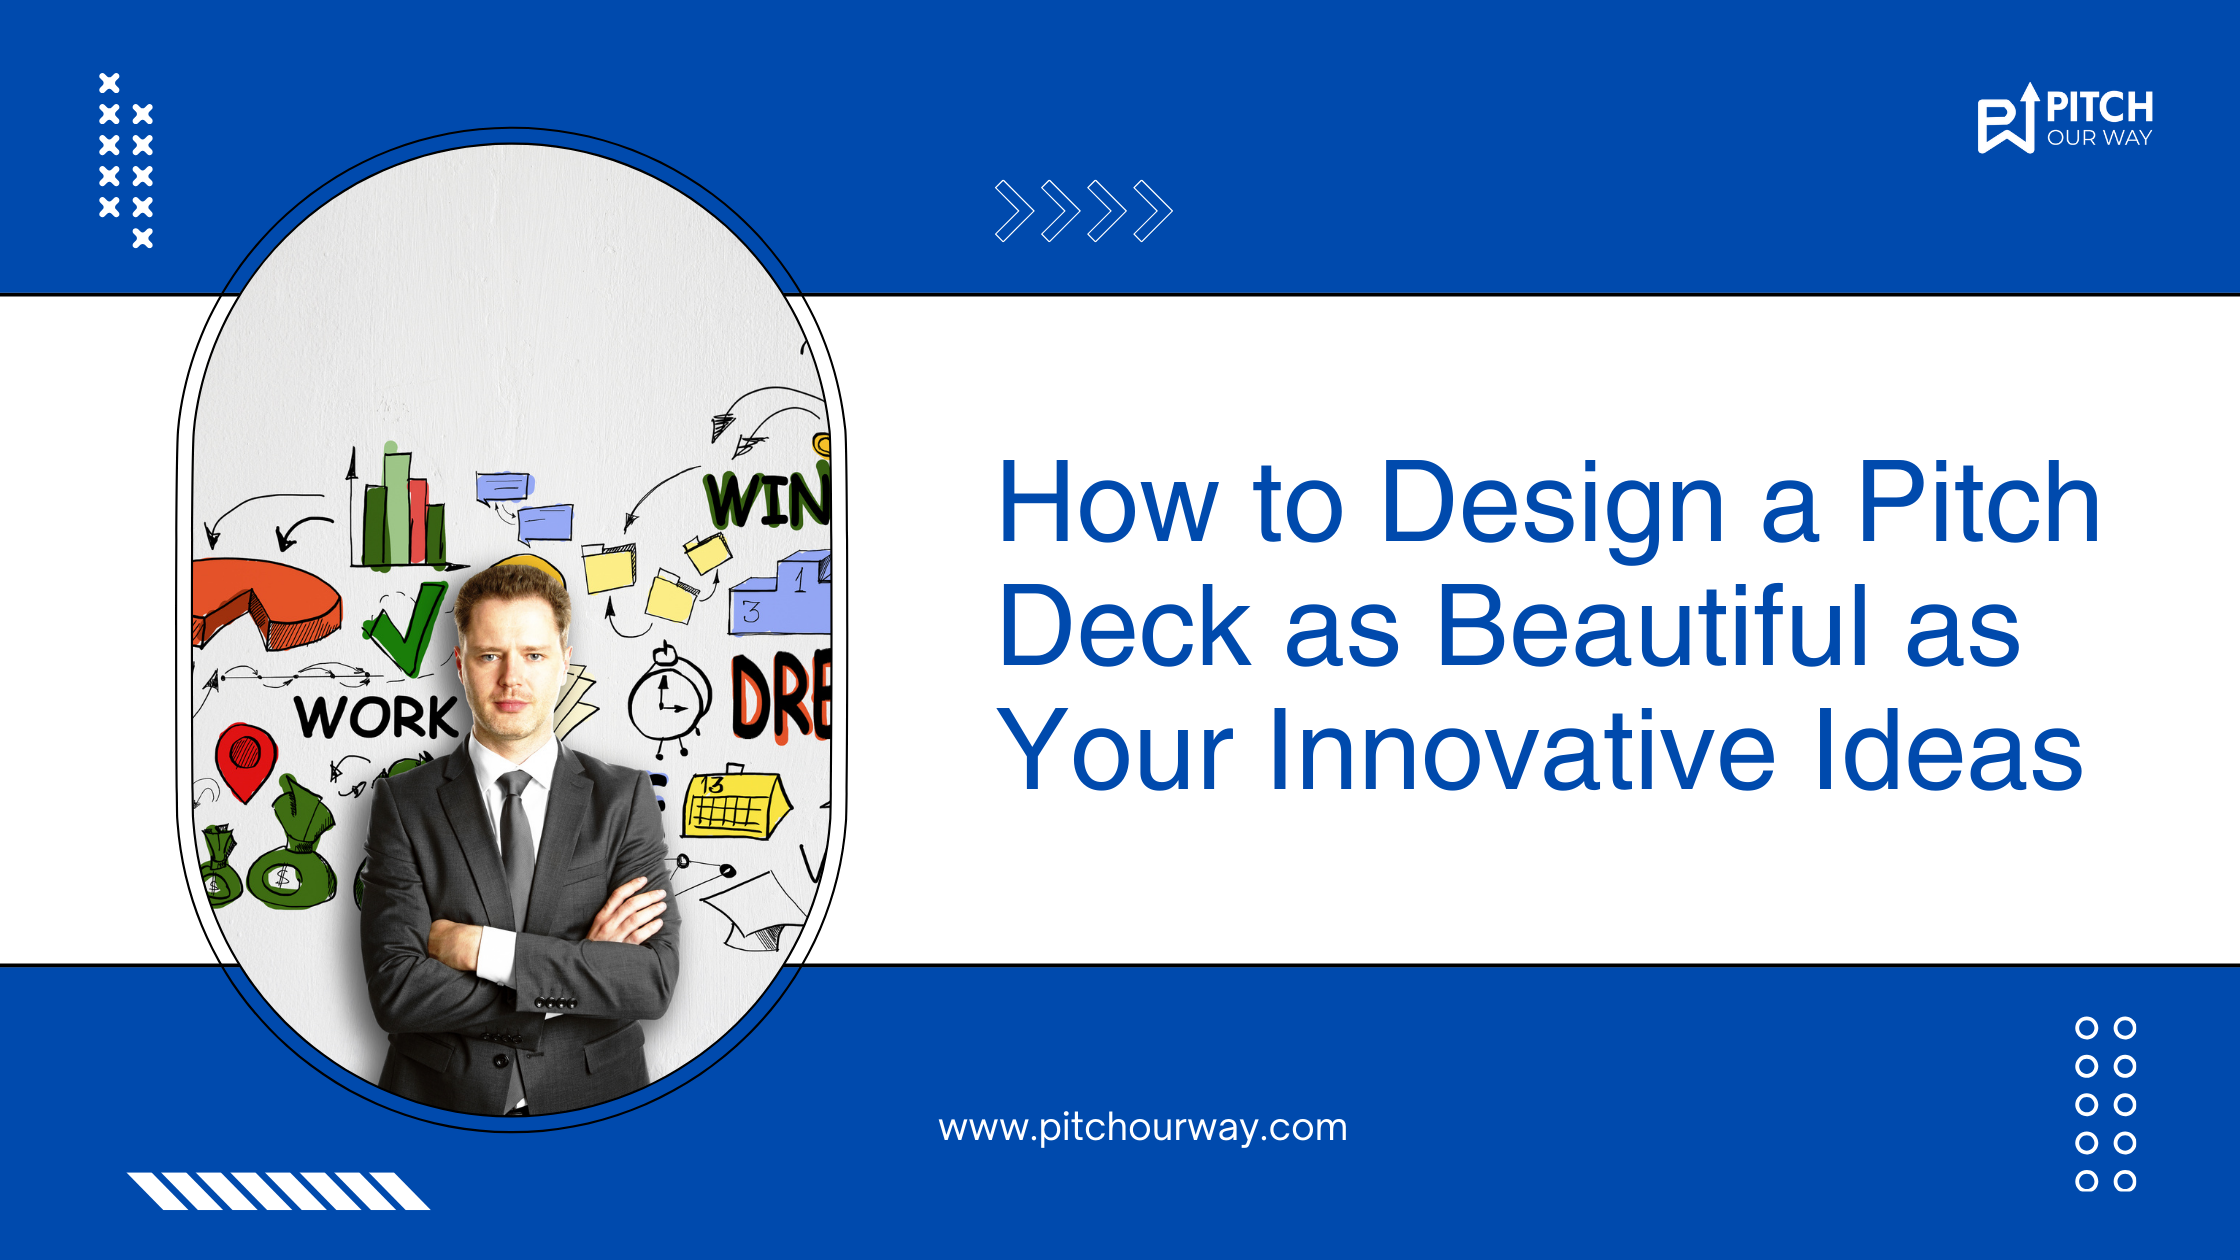 Design a Pitch Deck